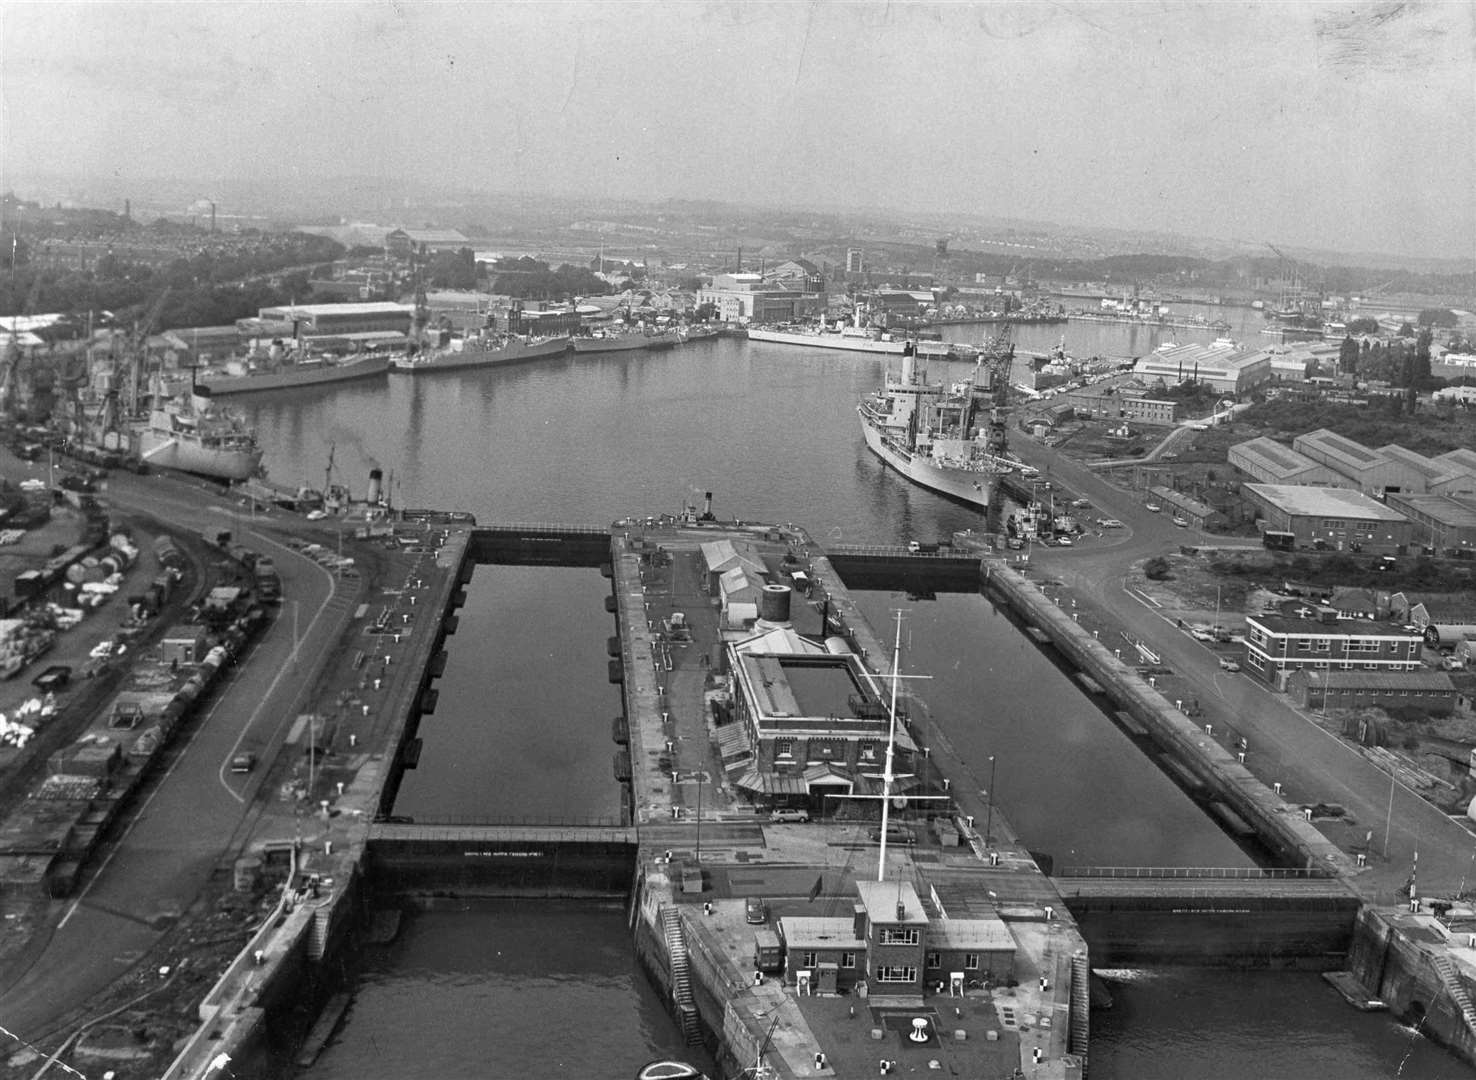 The dockyard in 1970